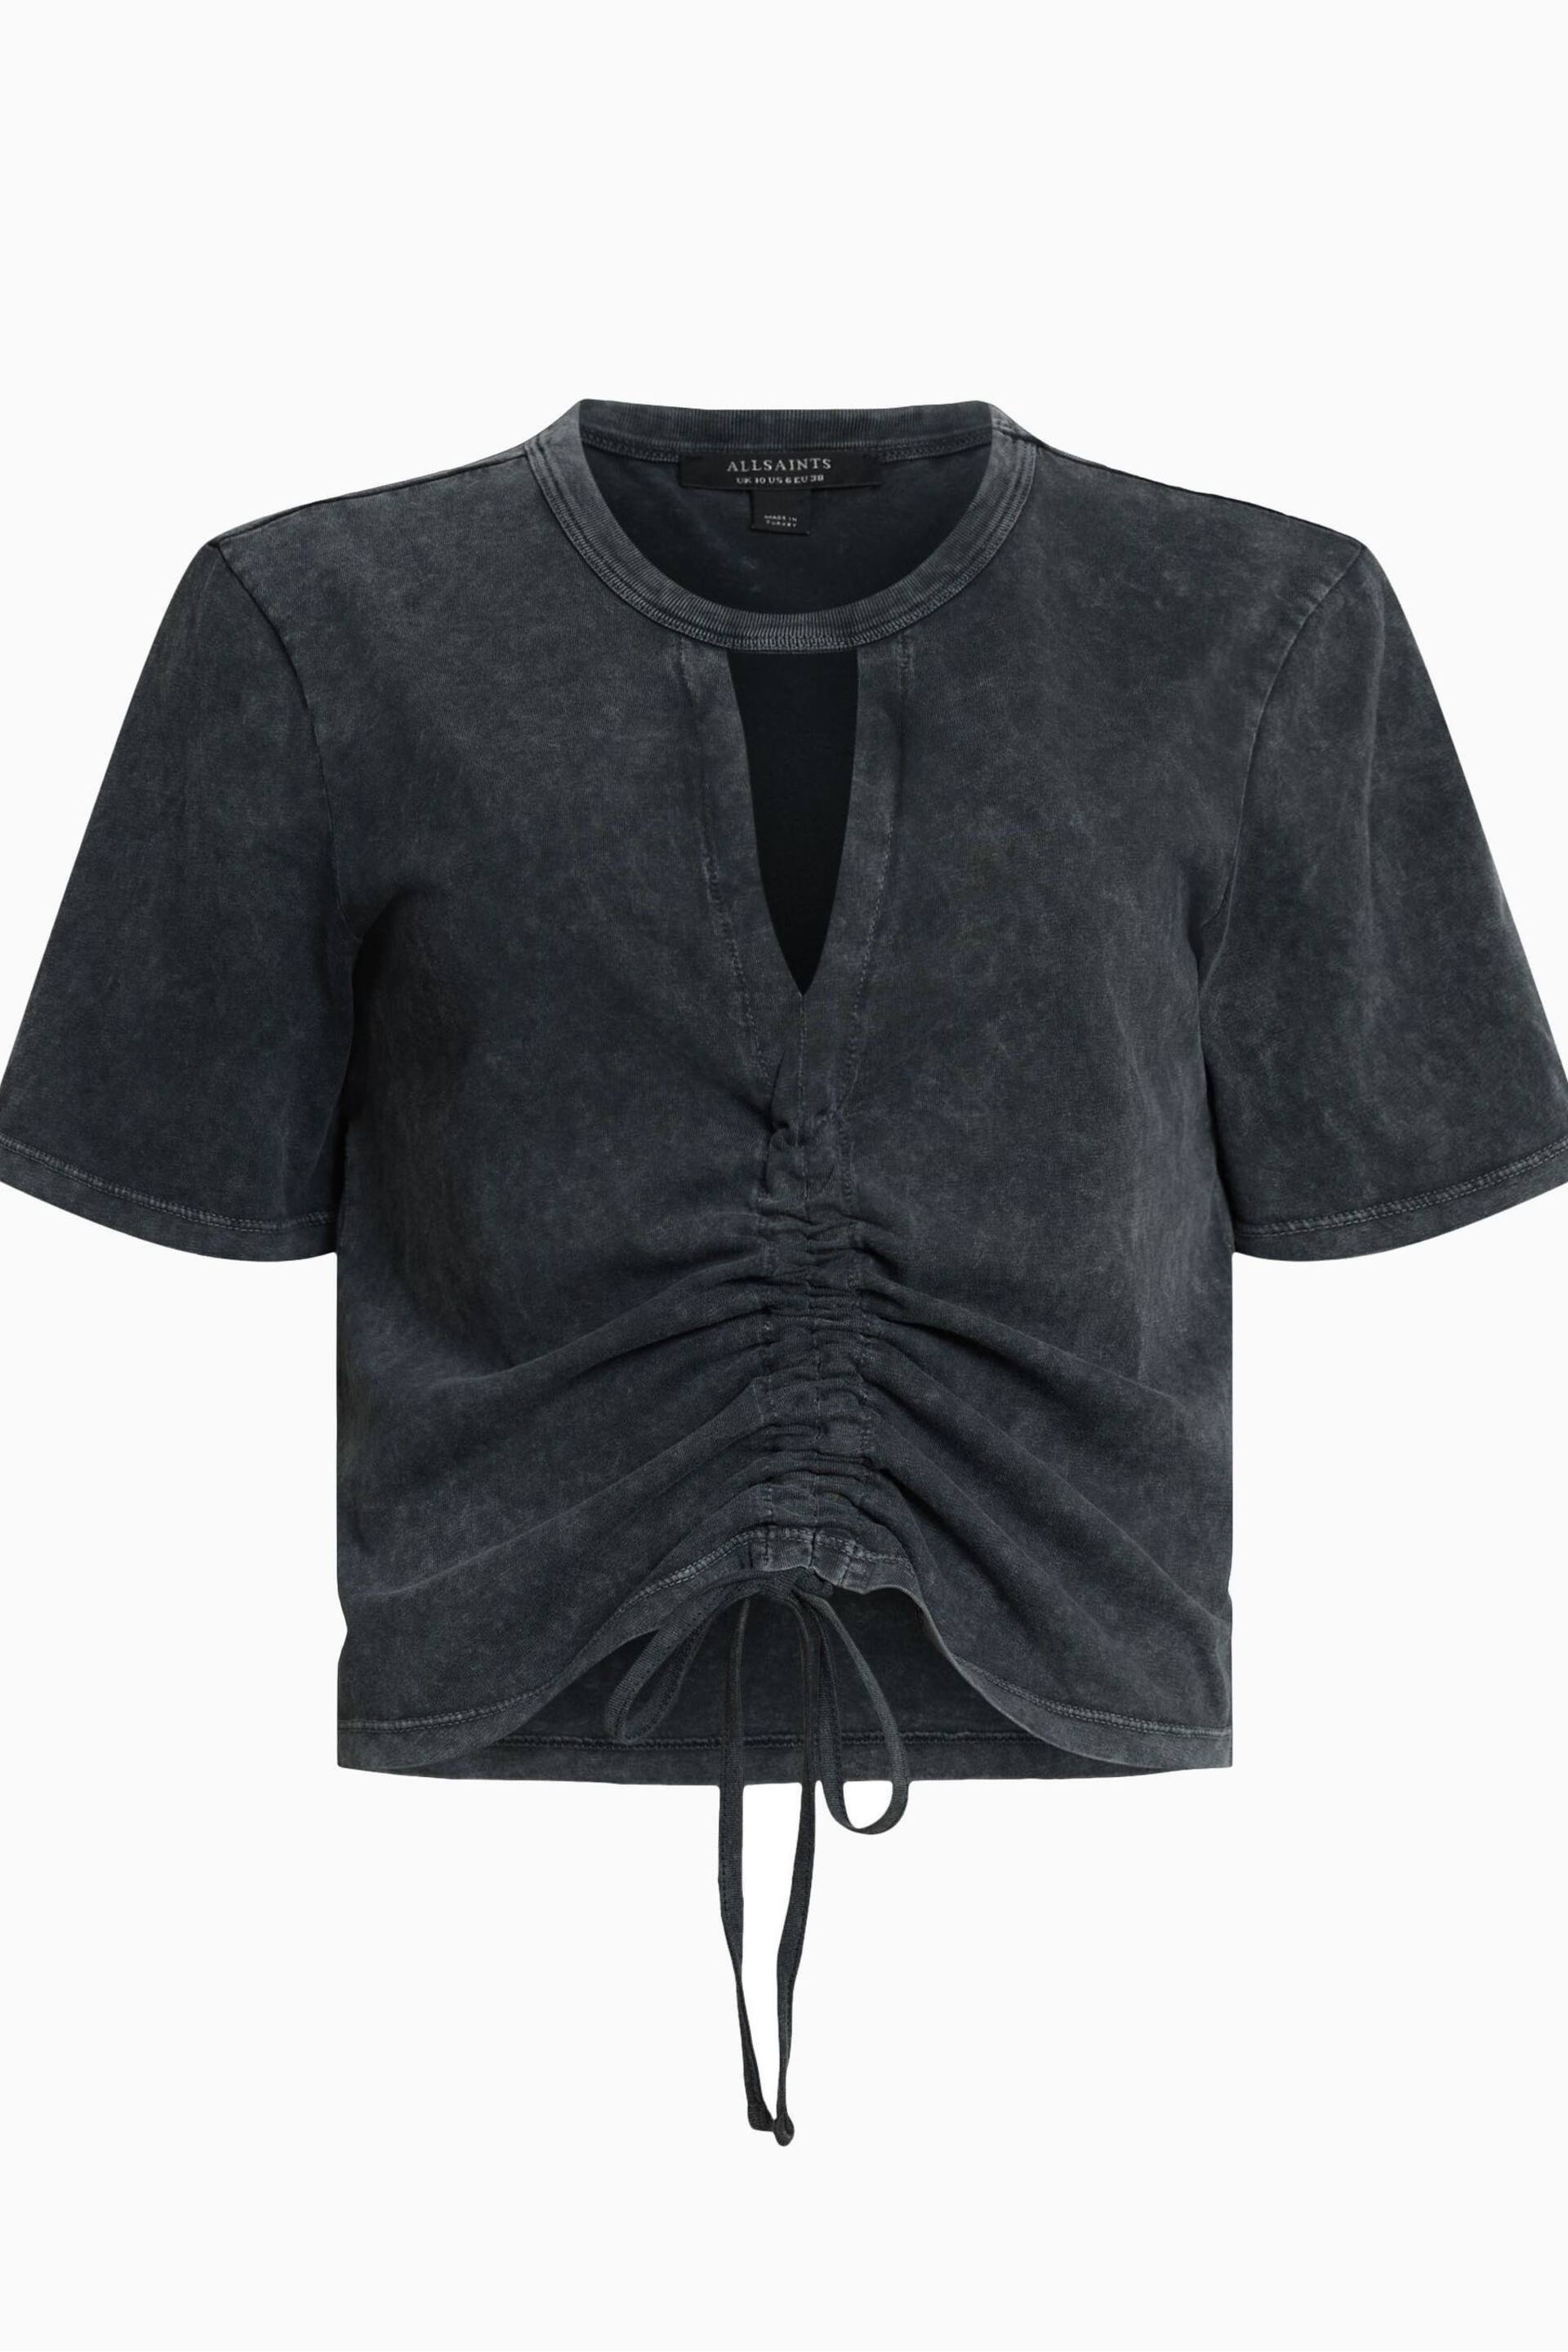 AllSaints Black Gigi T-Shirt - Image 8 of 8